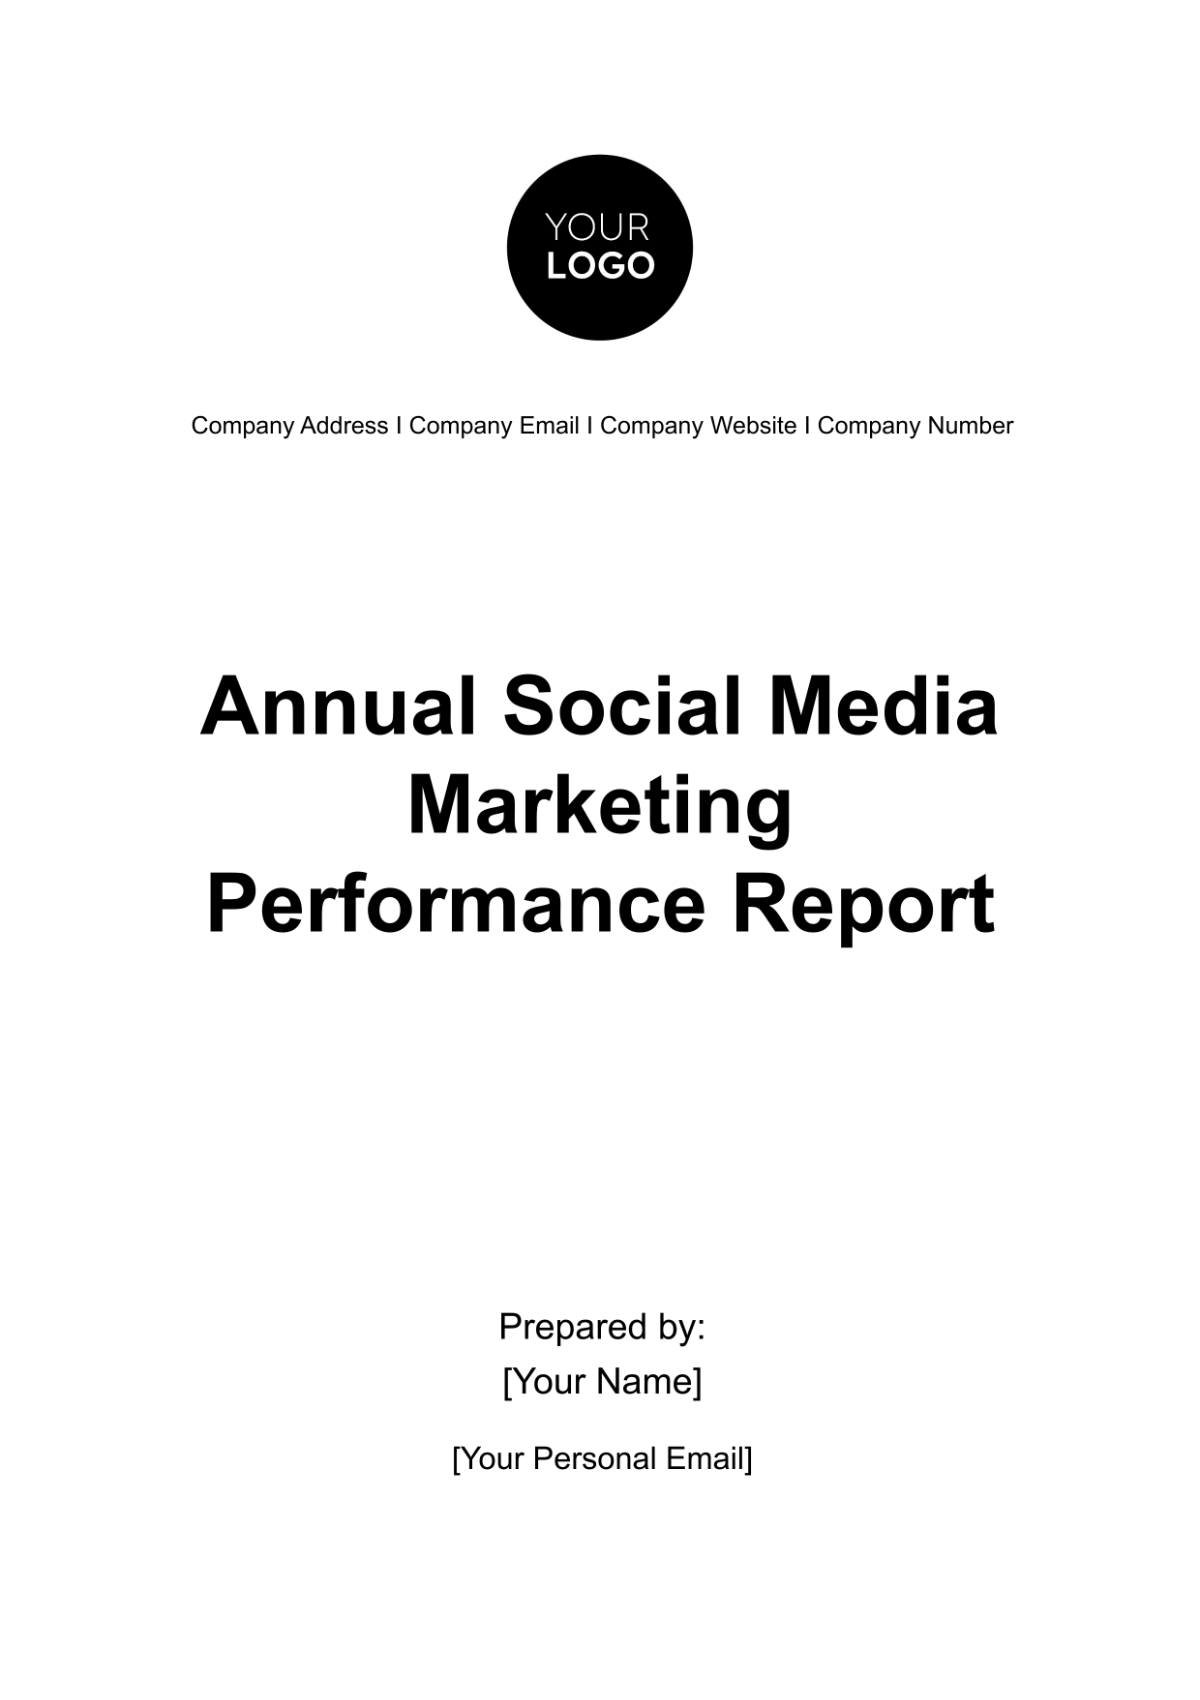 Annual Social Media Marketing Performance Report Template